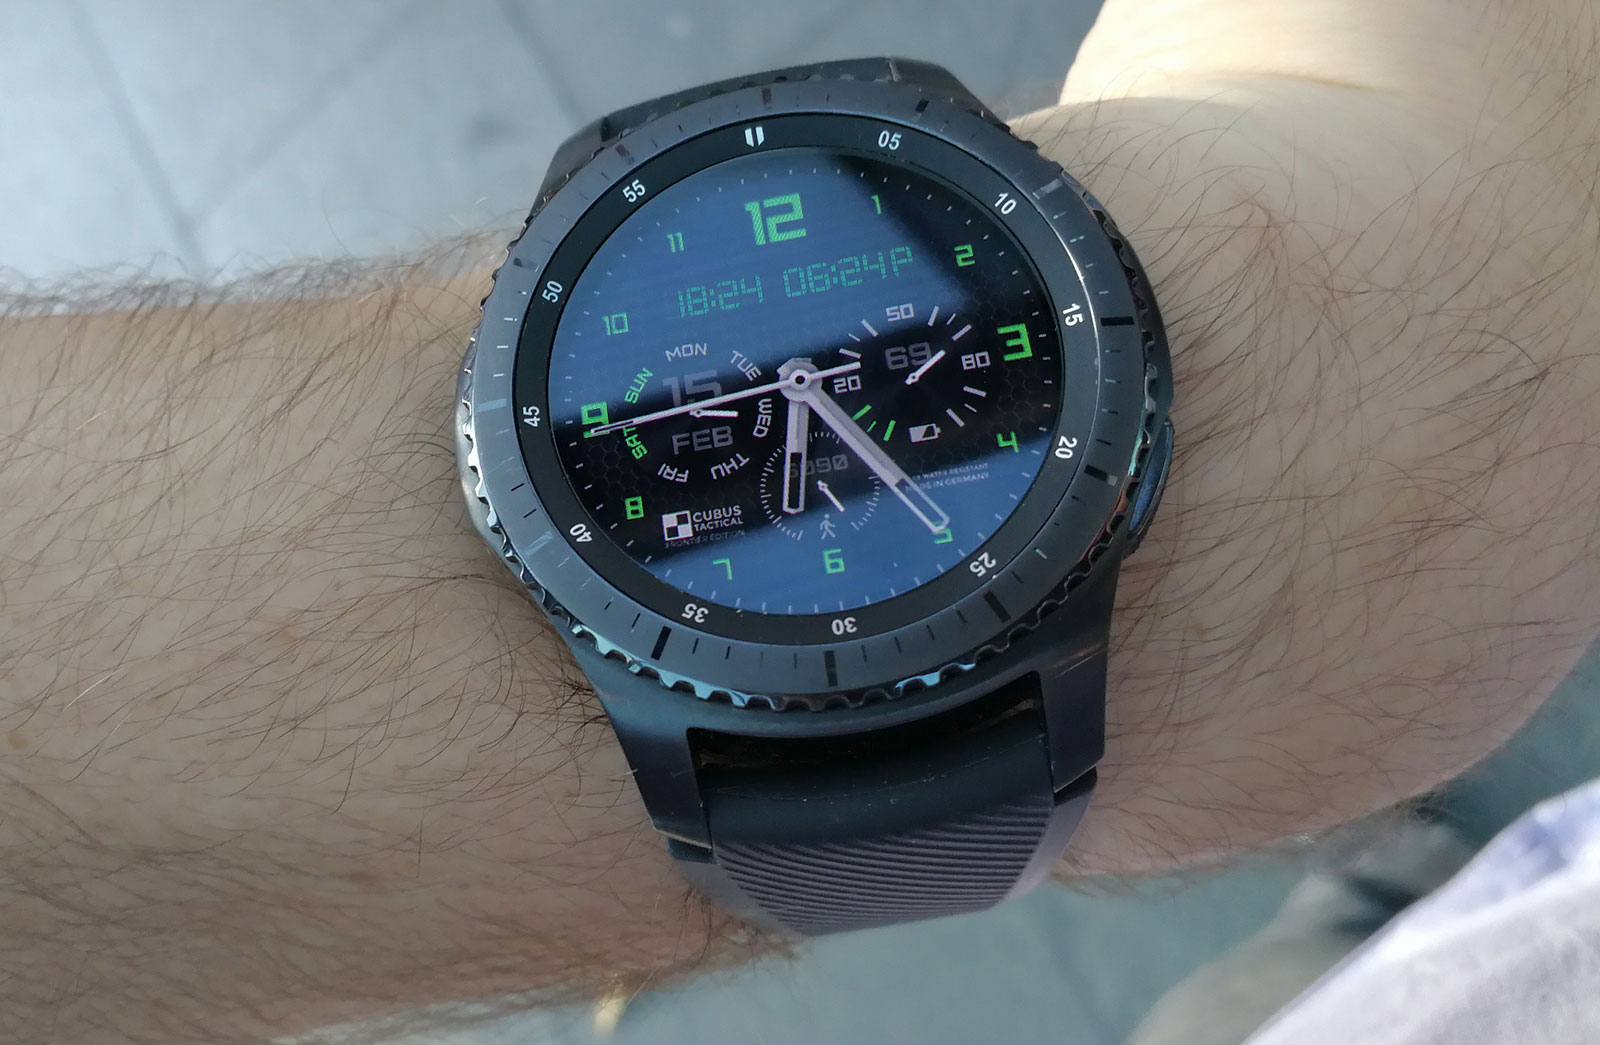 samsung watch gear s3 review